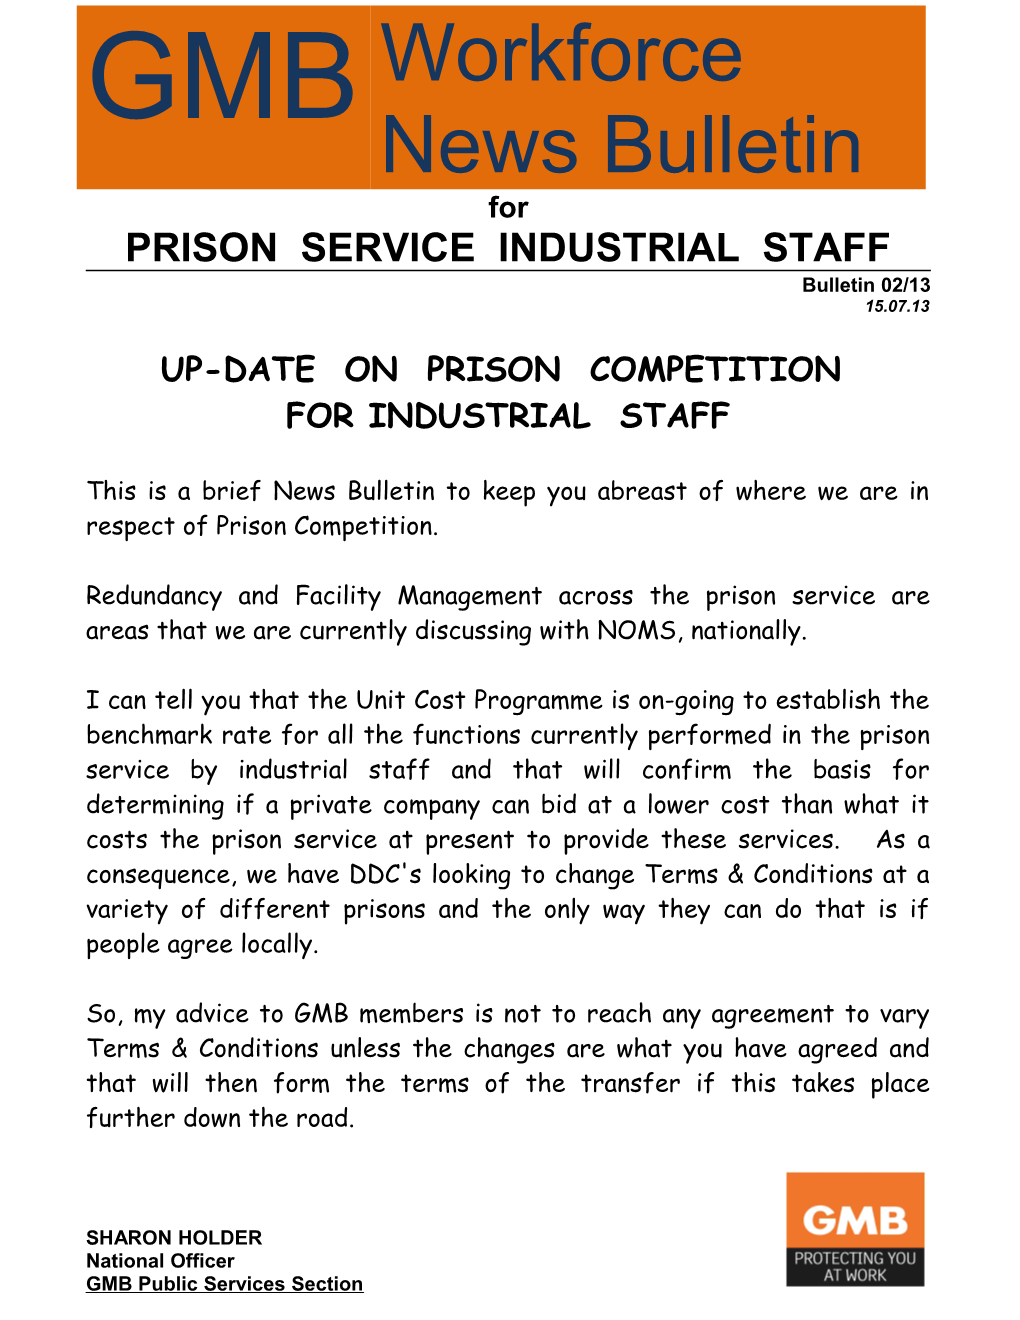 Prison Service Industrial Staff